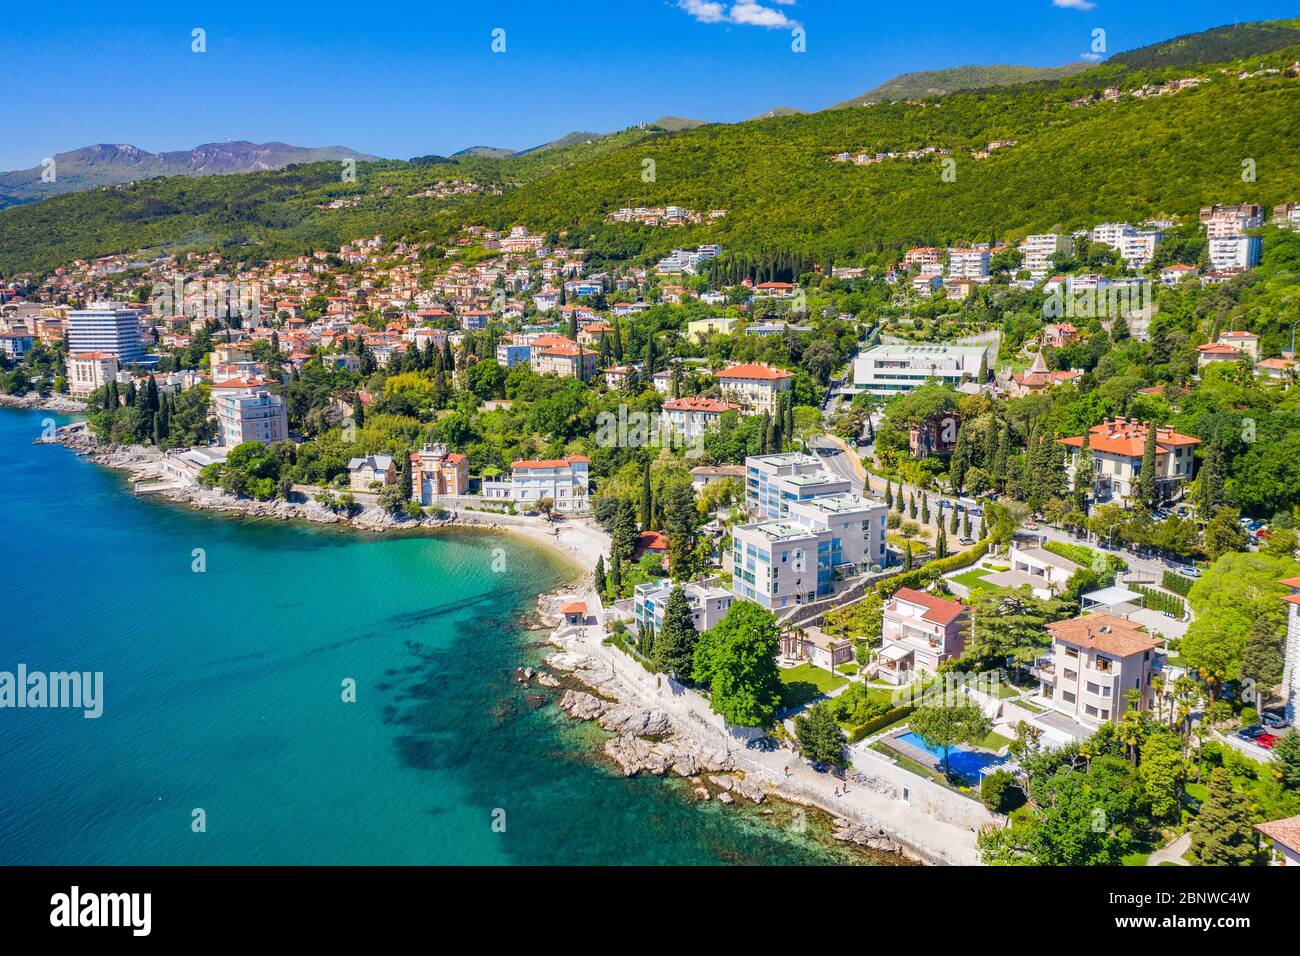 Croatia, Adriatic coast, beautiful town of Opatija and Volosko, popular tourist resort, coastline aerial view, Kvarner bay Stock Photo